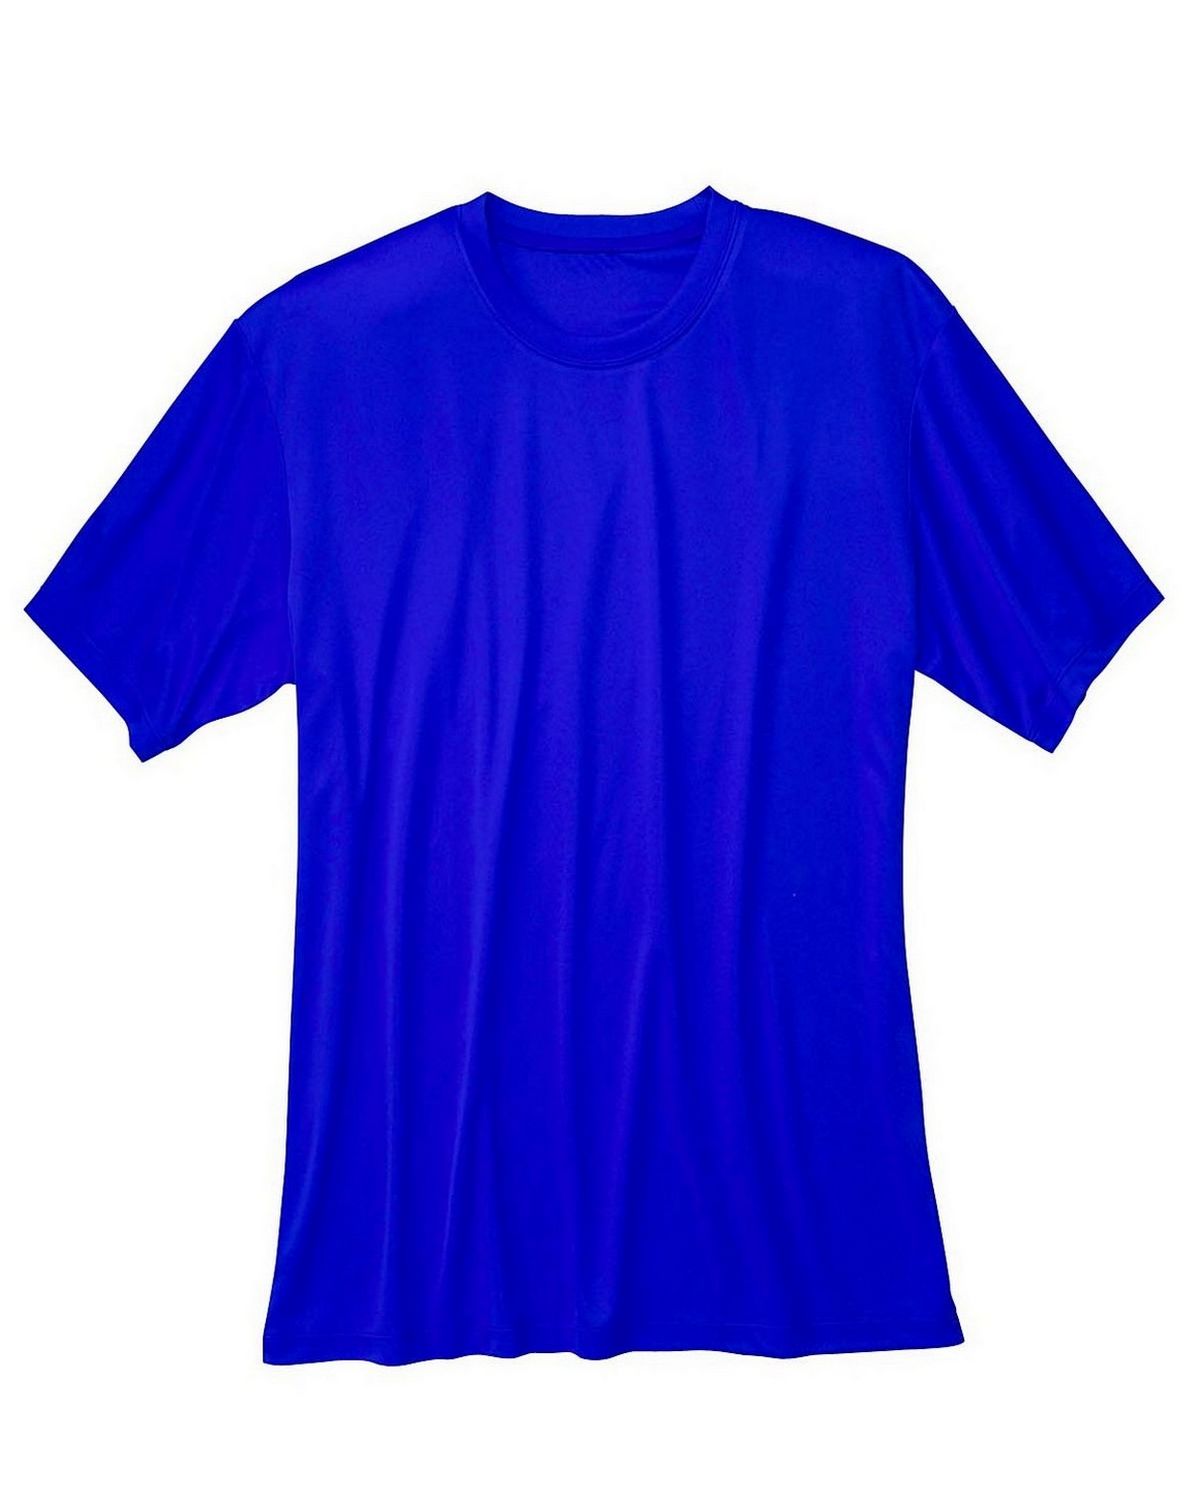 Hanes 4820 Cool Dri T Shirt - ApparelnBags.com